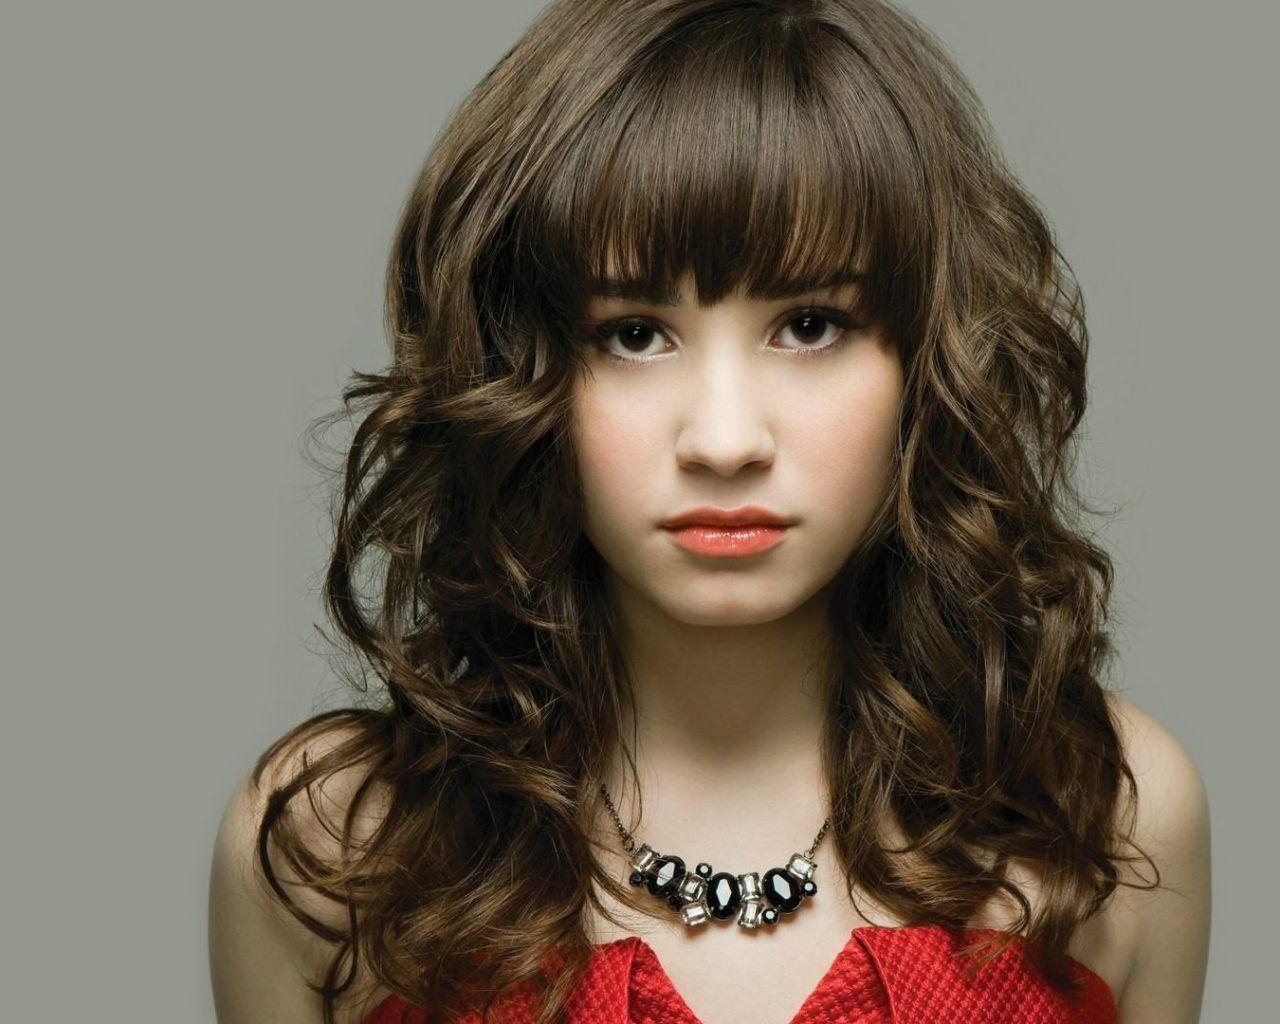 Demi Lovato HD Wallpaper Download For Desktop and Mobile